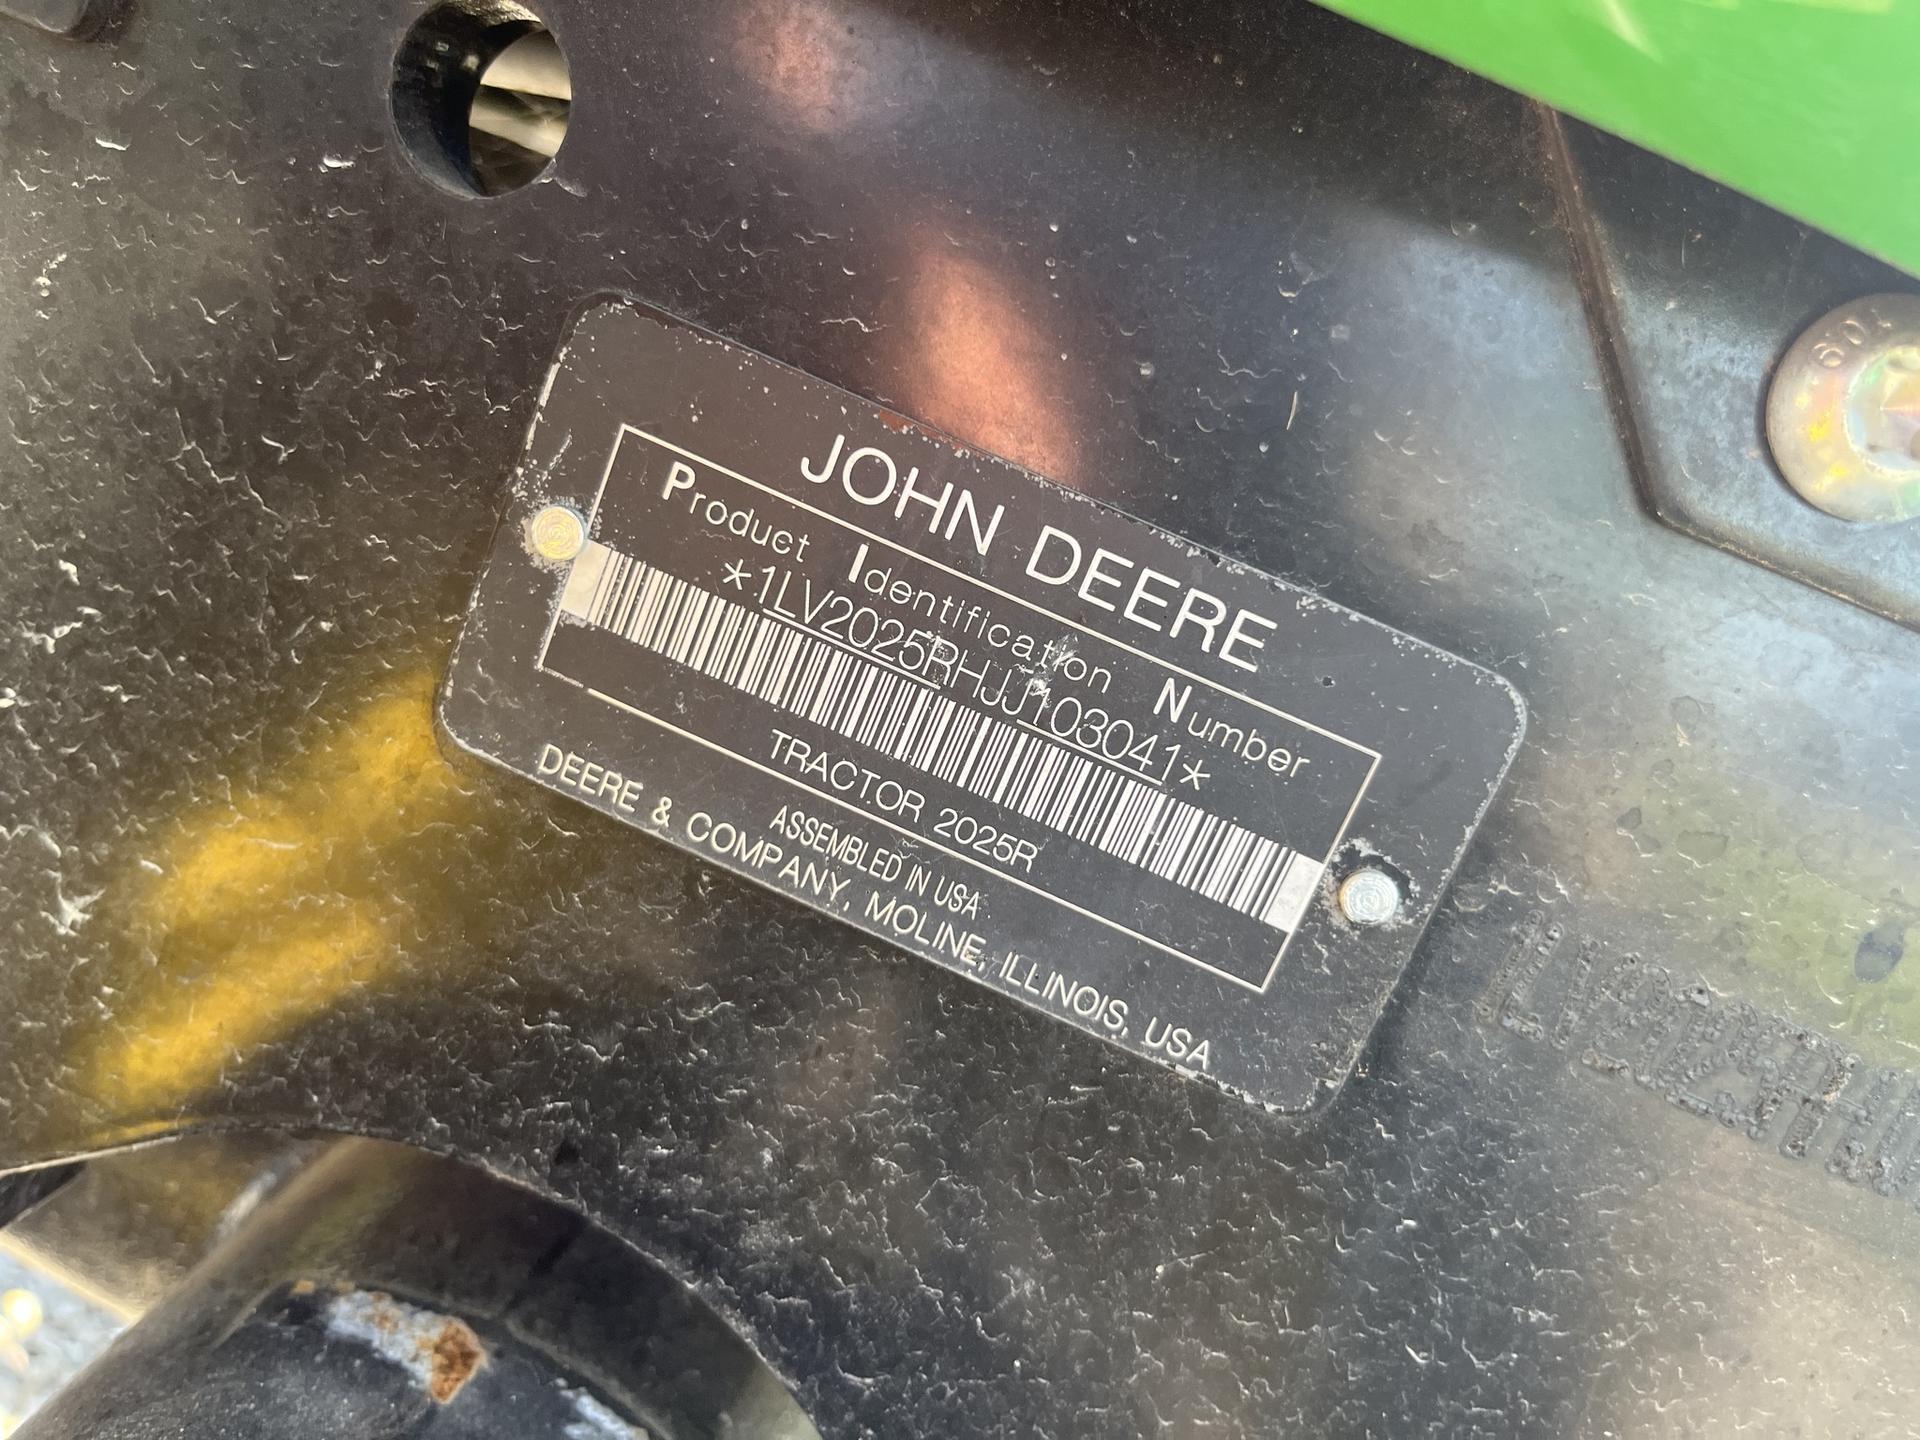 2018 John Deere 2025R